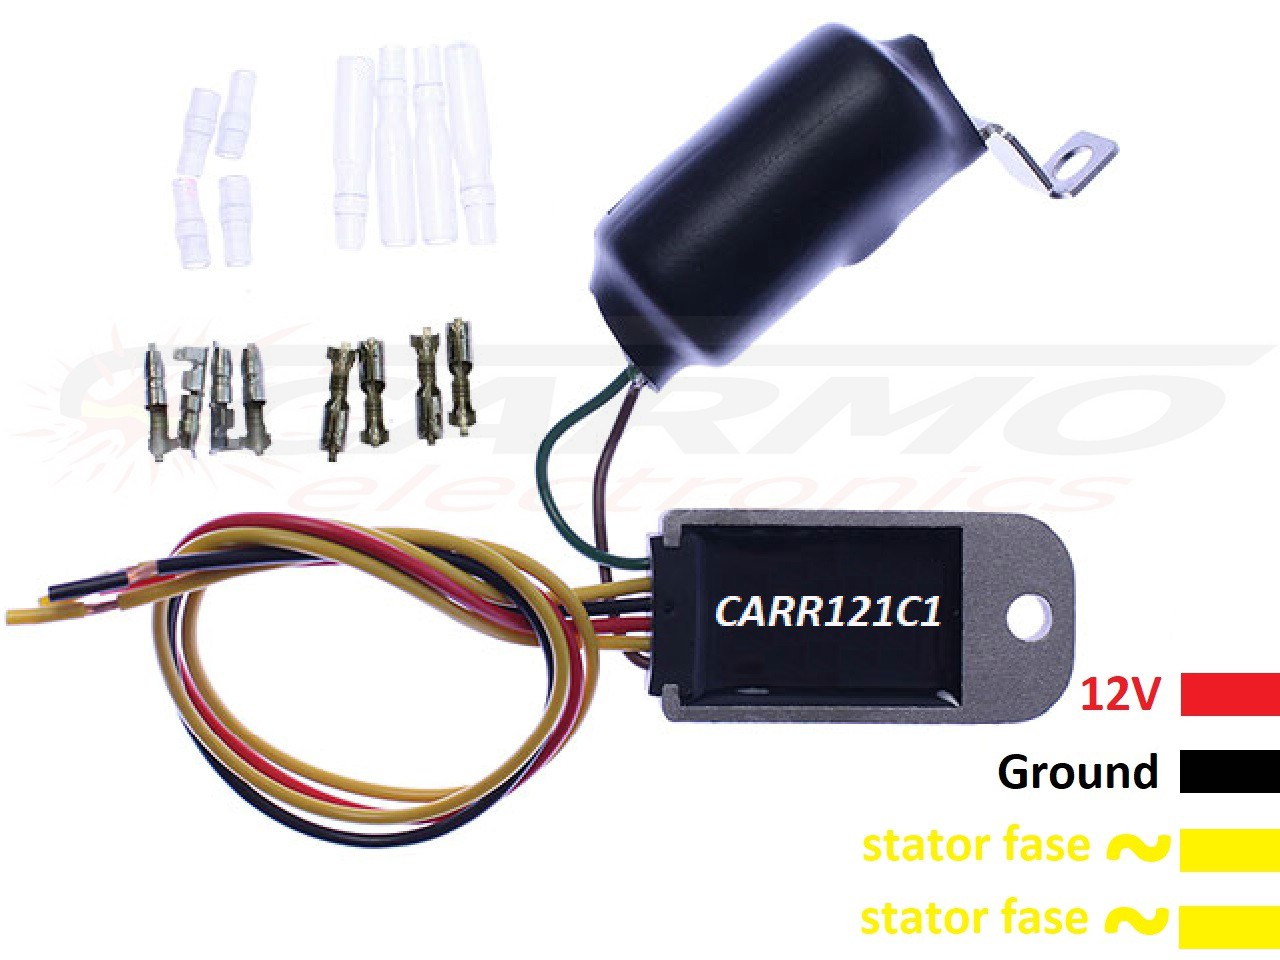 CARR121C1 - 2 fase voltage regulator with capacitor, no batterie needed - for LED lighting - Clique na Imagem para Fechar